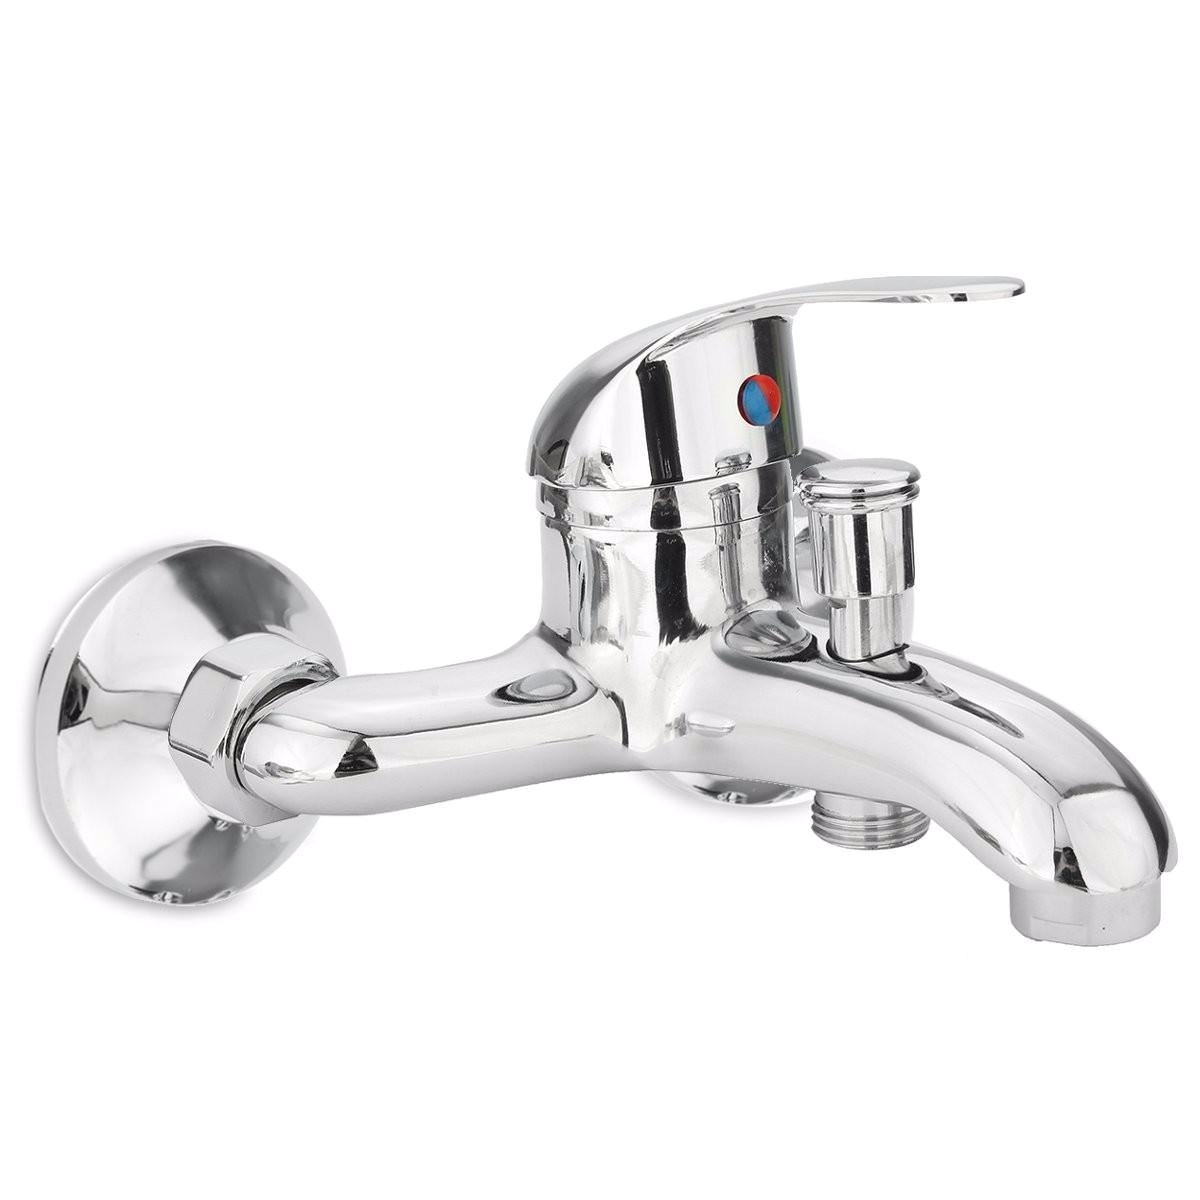 chrome bathroom mixer faucet tap bathtub shower head hot cold mixing vavle knob spout wall mount